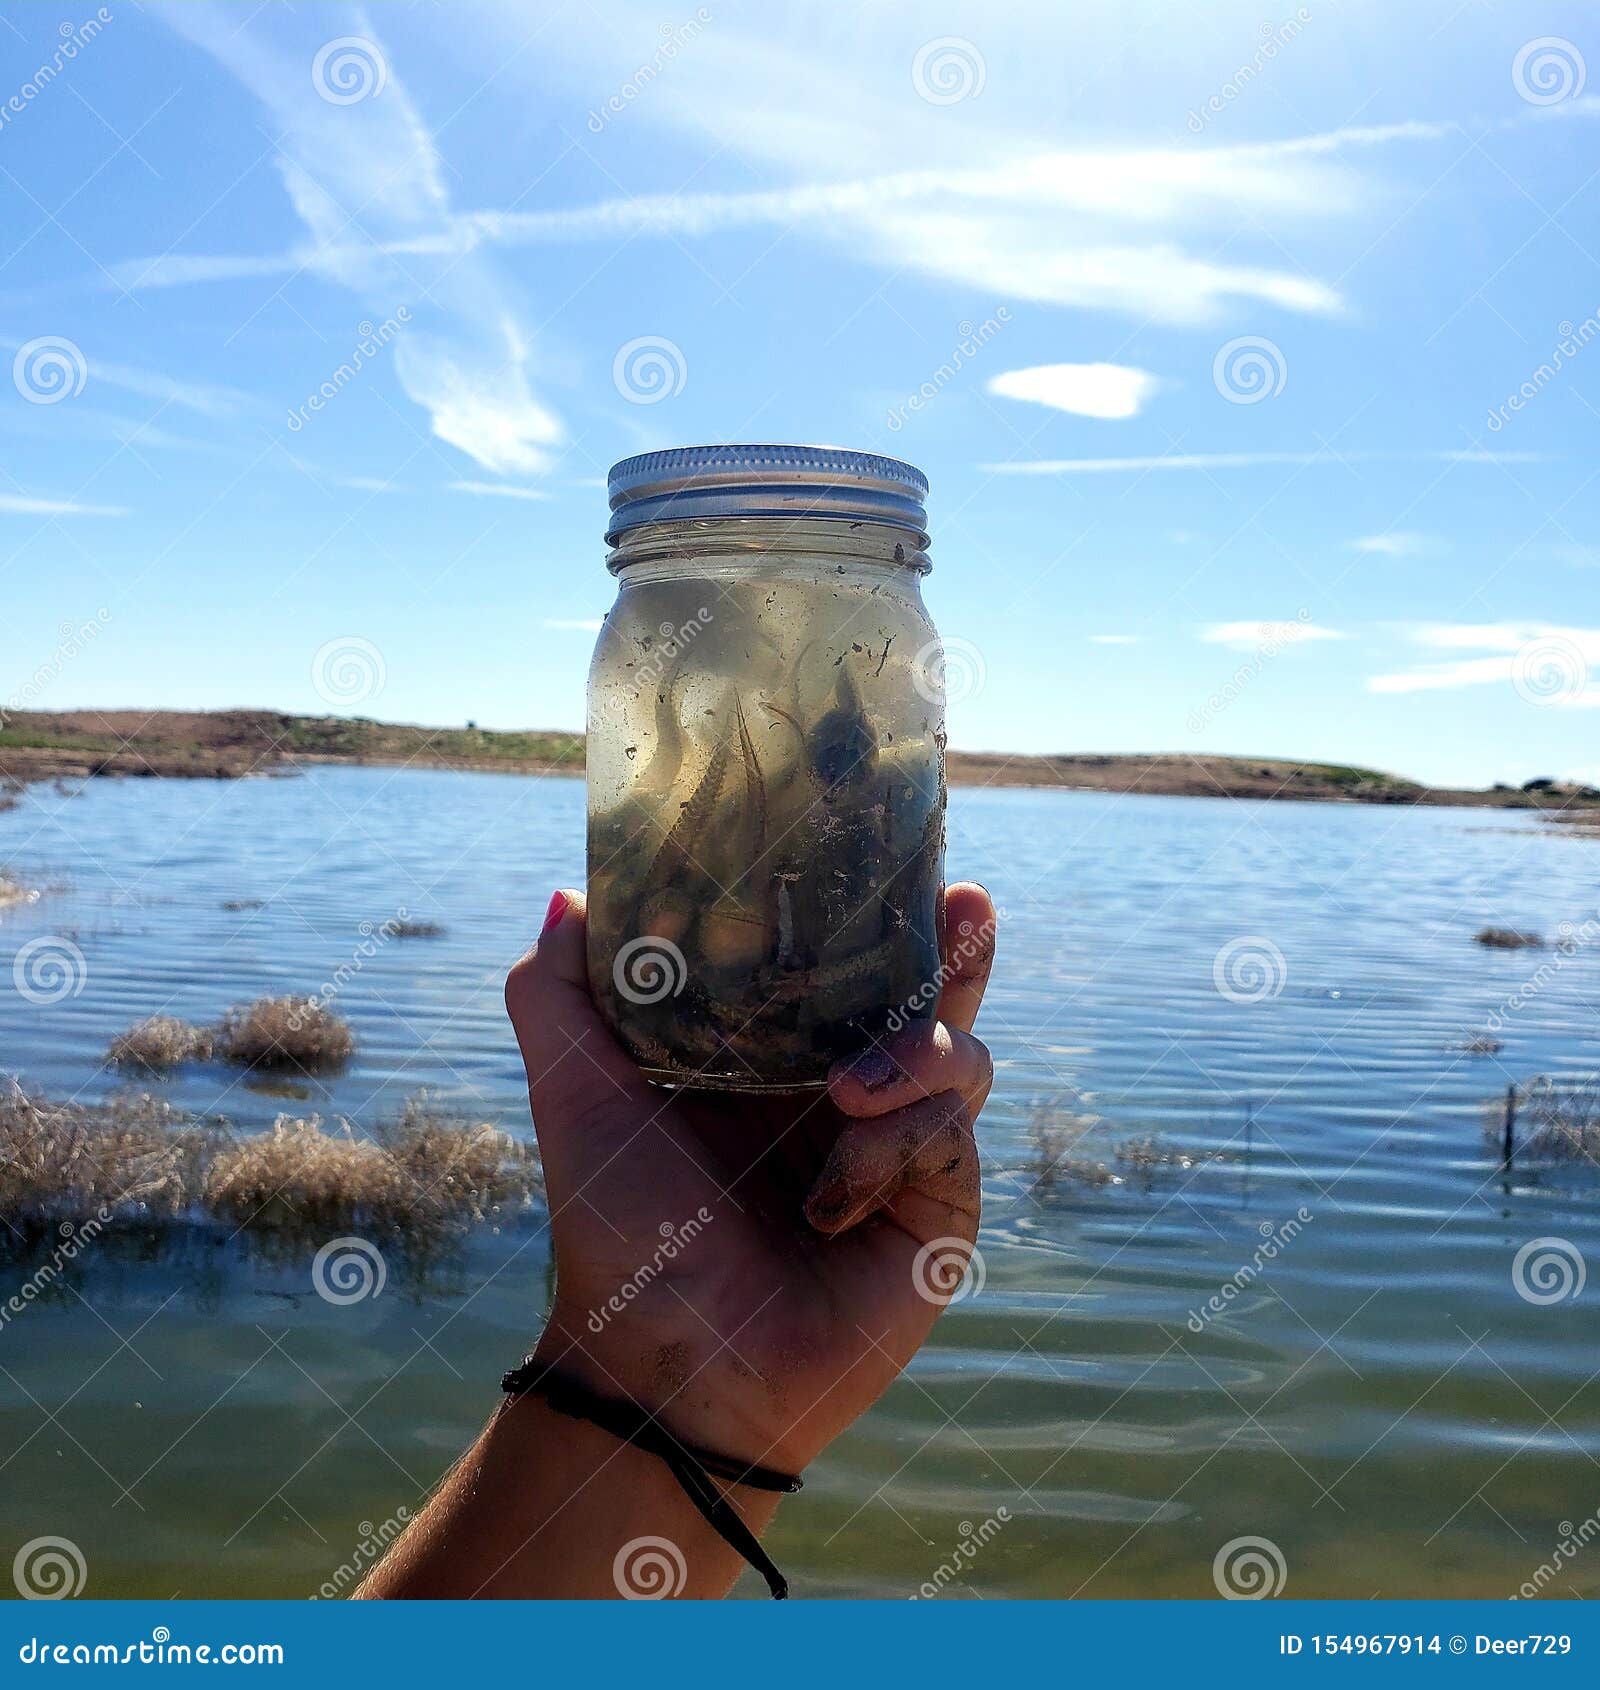 Tadpoles in a Jar